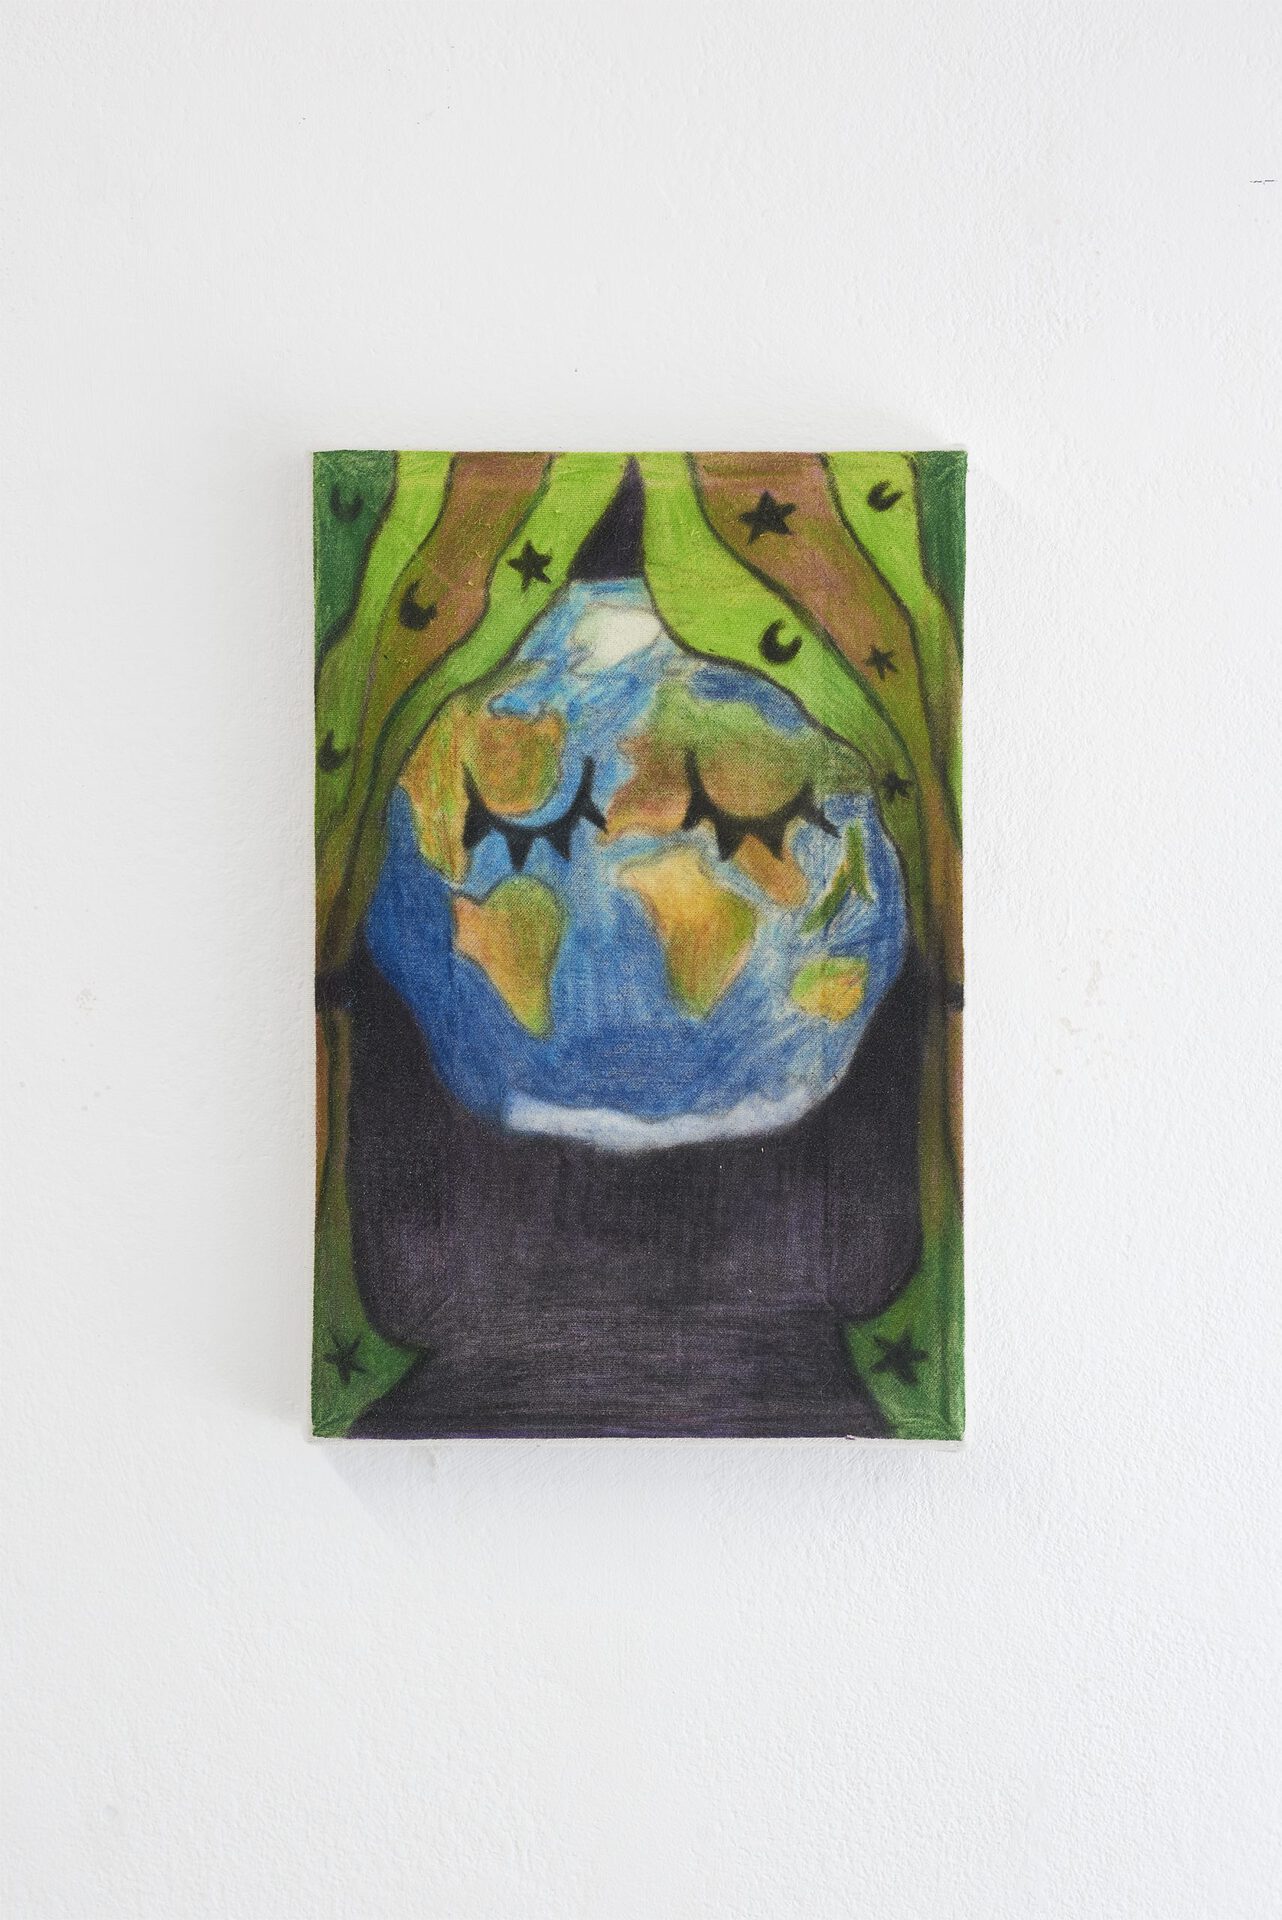 Øleg&Kaśka, The Earth, 2021, crayons on canvas, 40x30cm